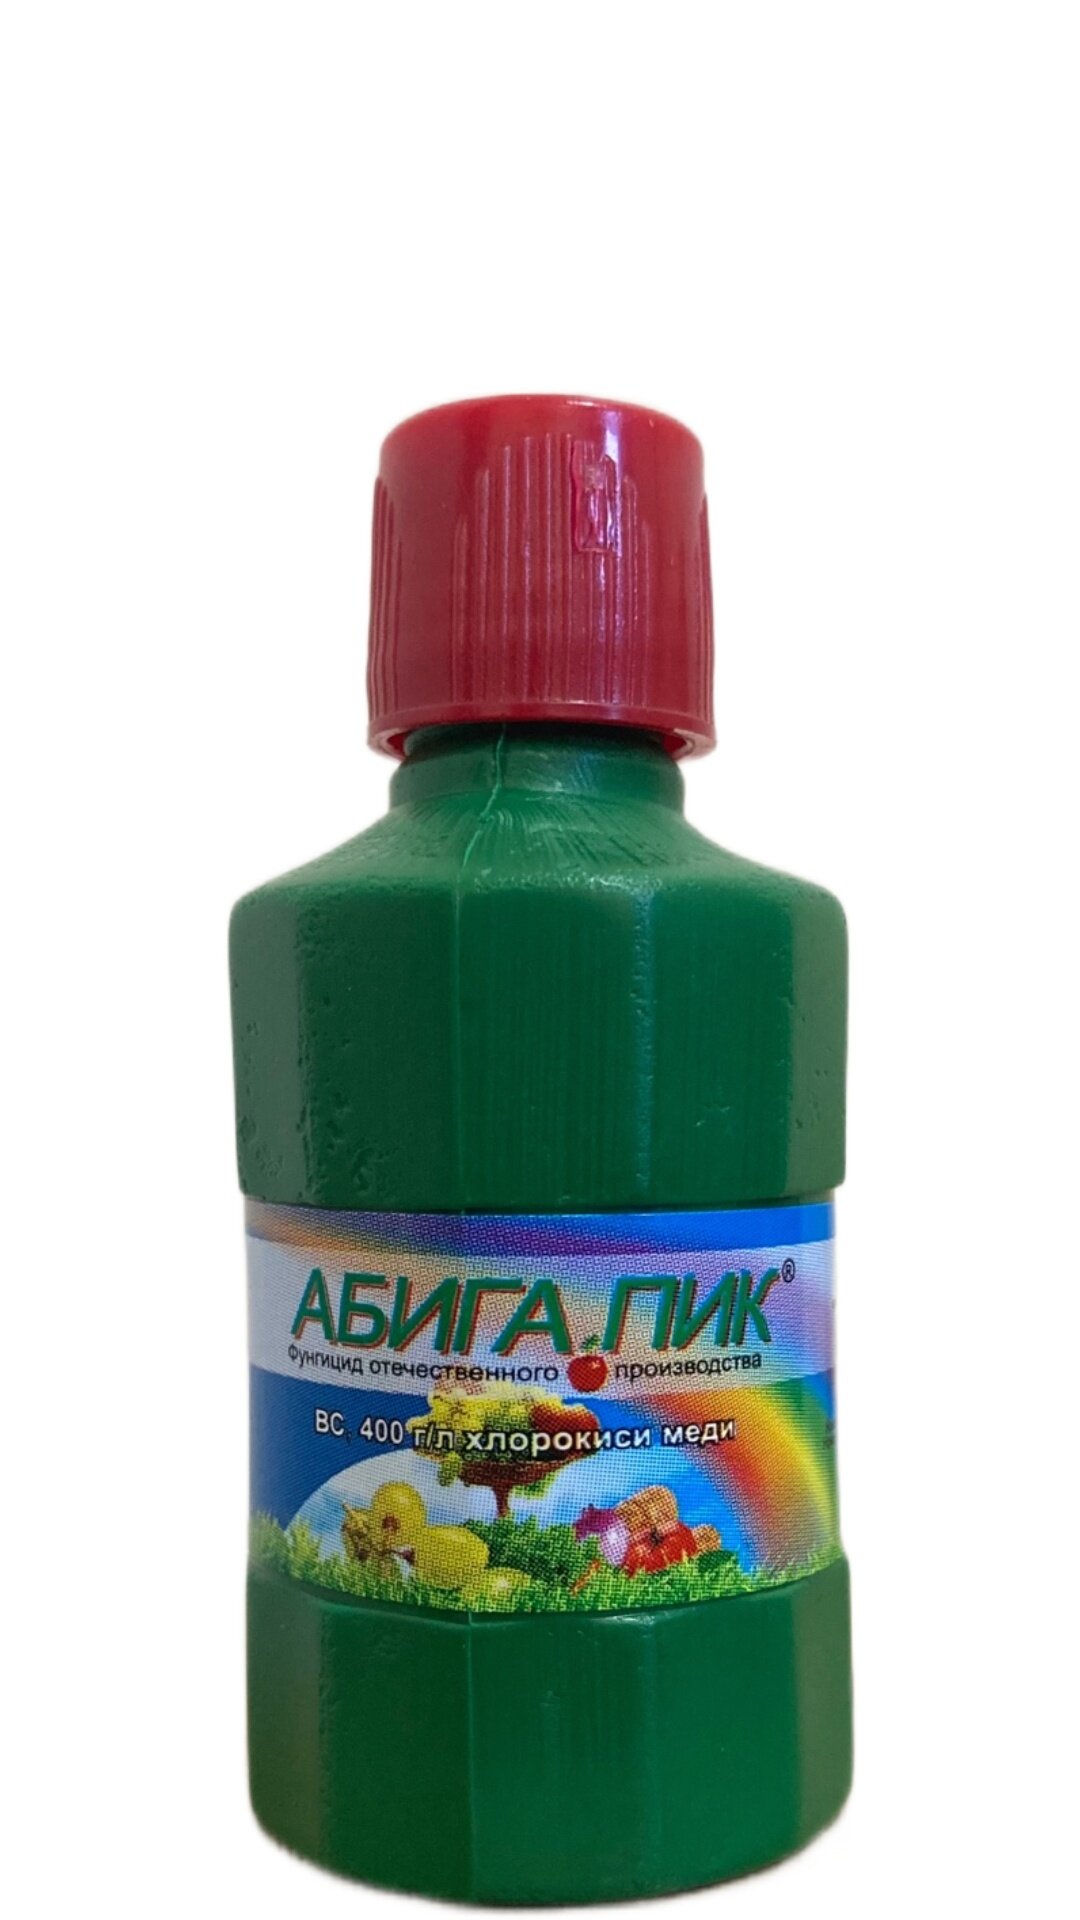 Абига-Пик, 50 гр